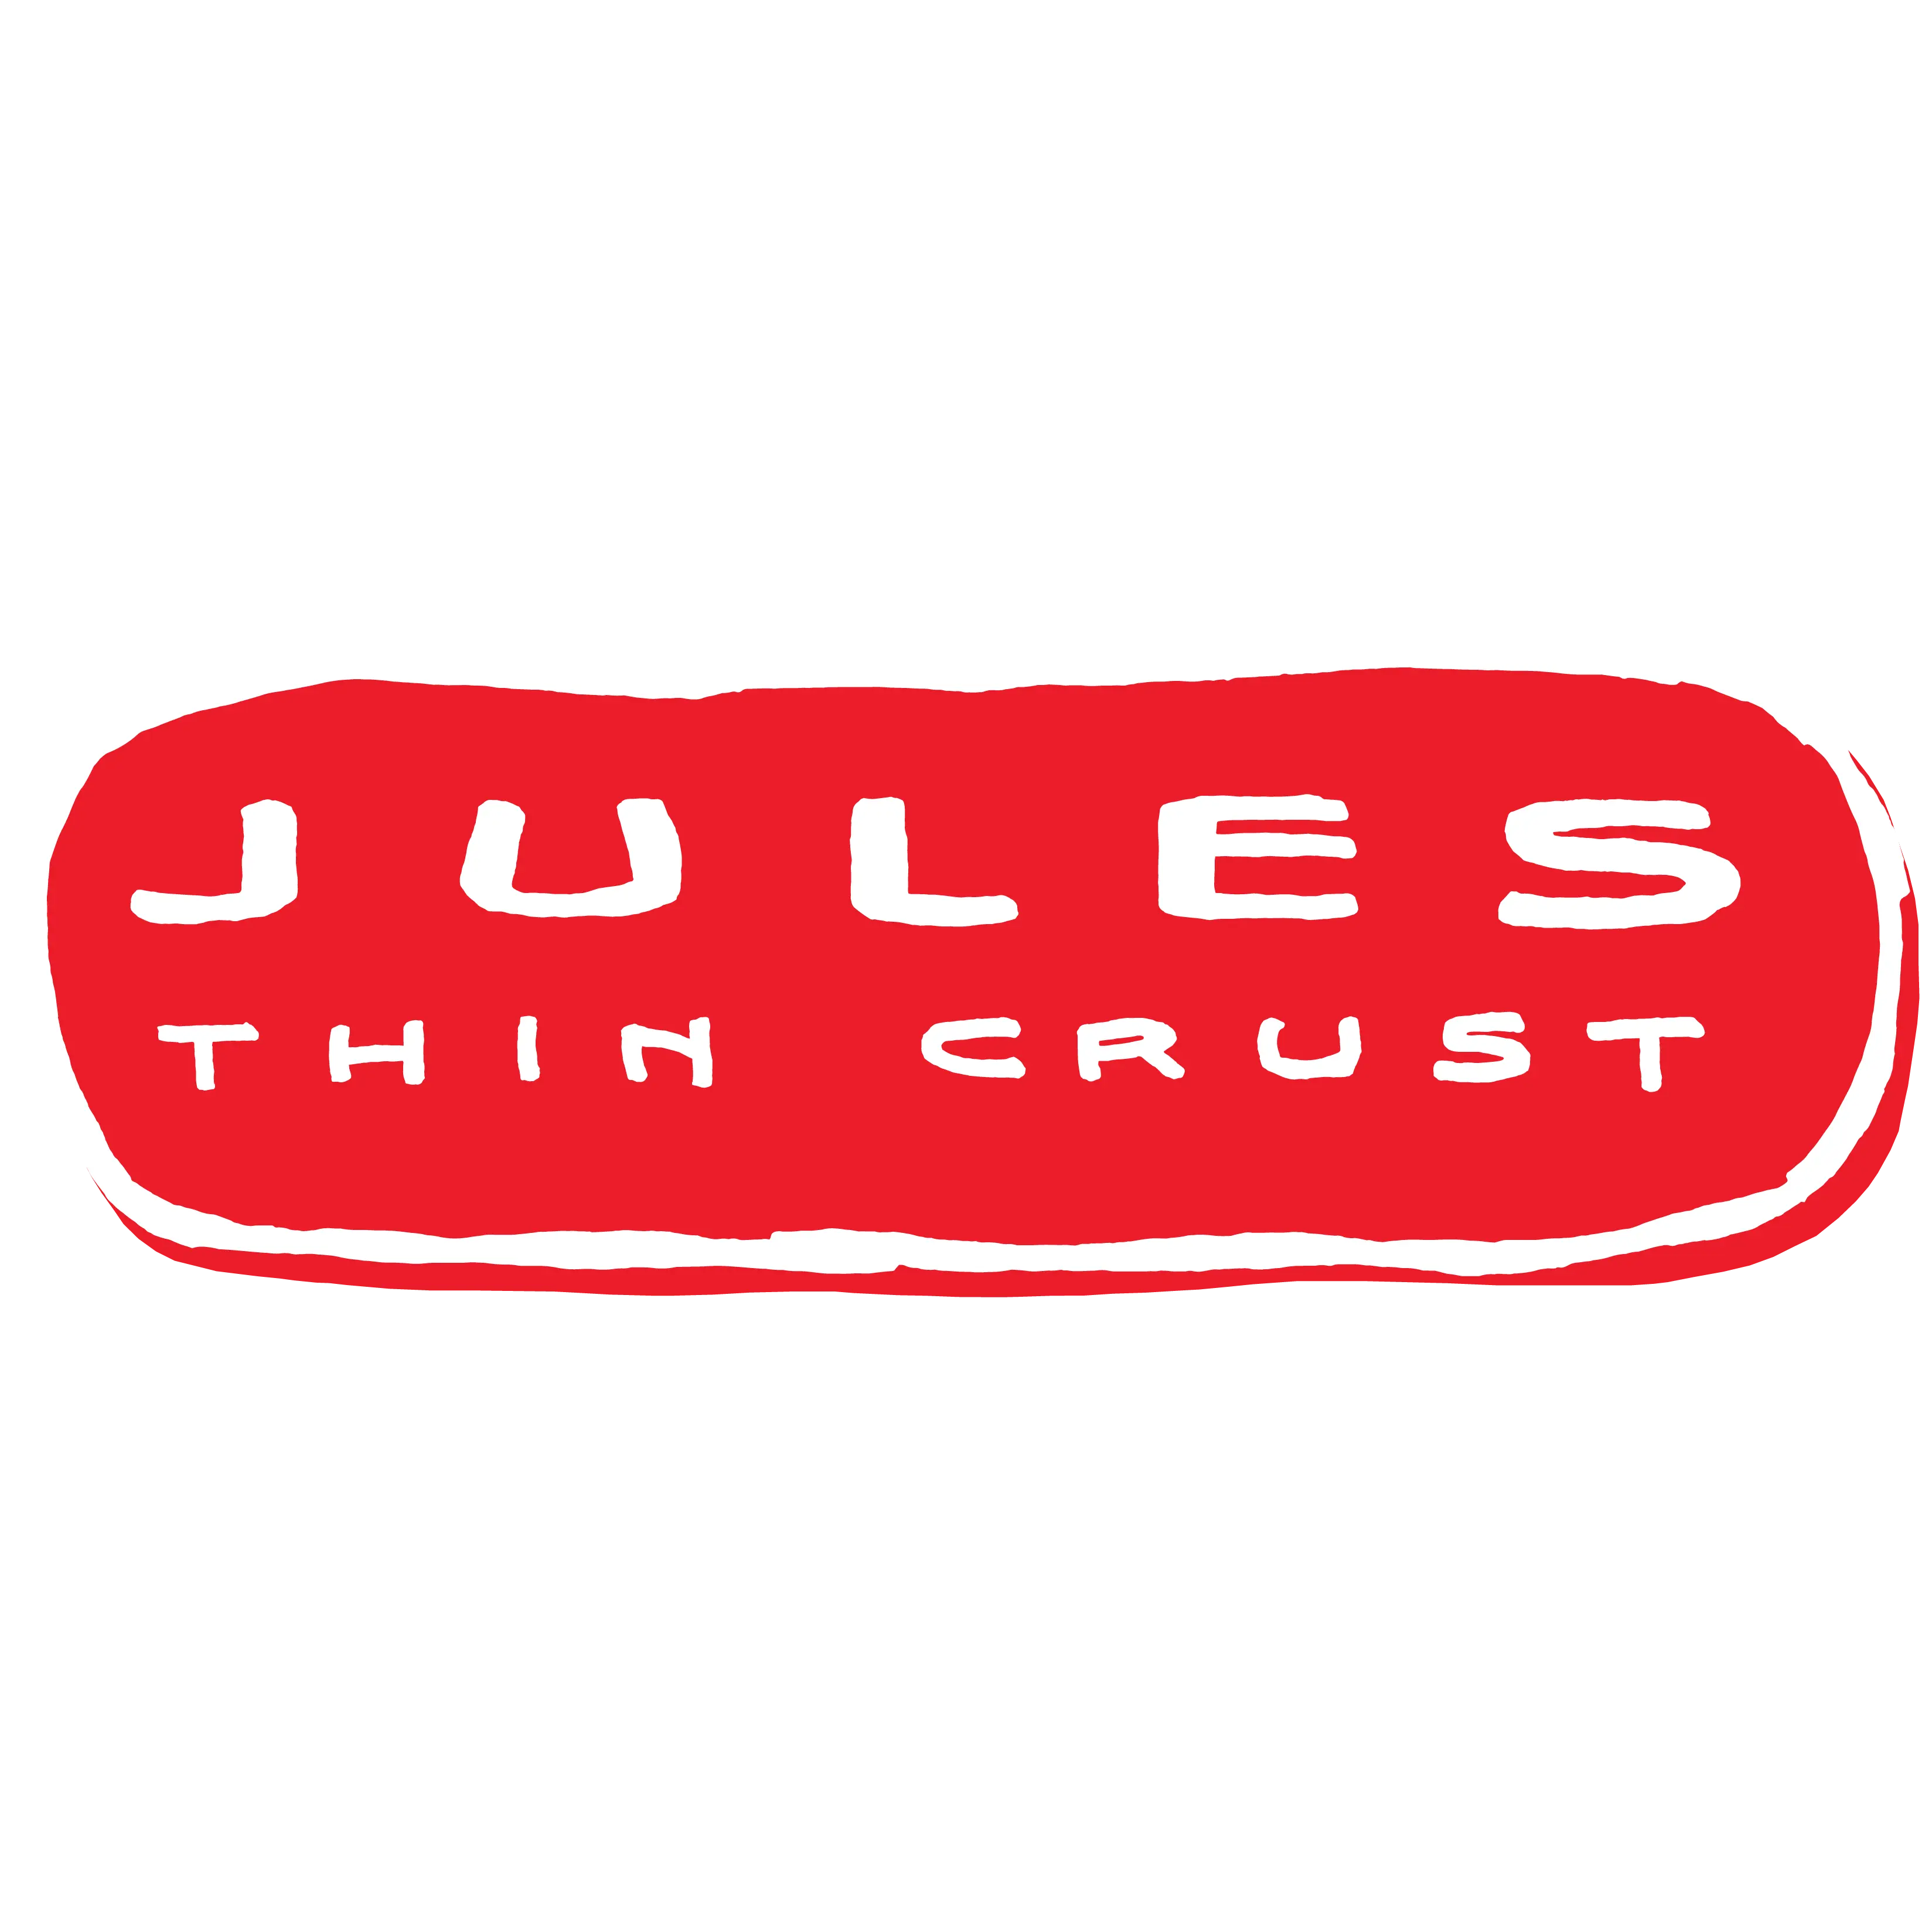 jules thin crust app logo